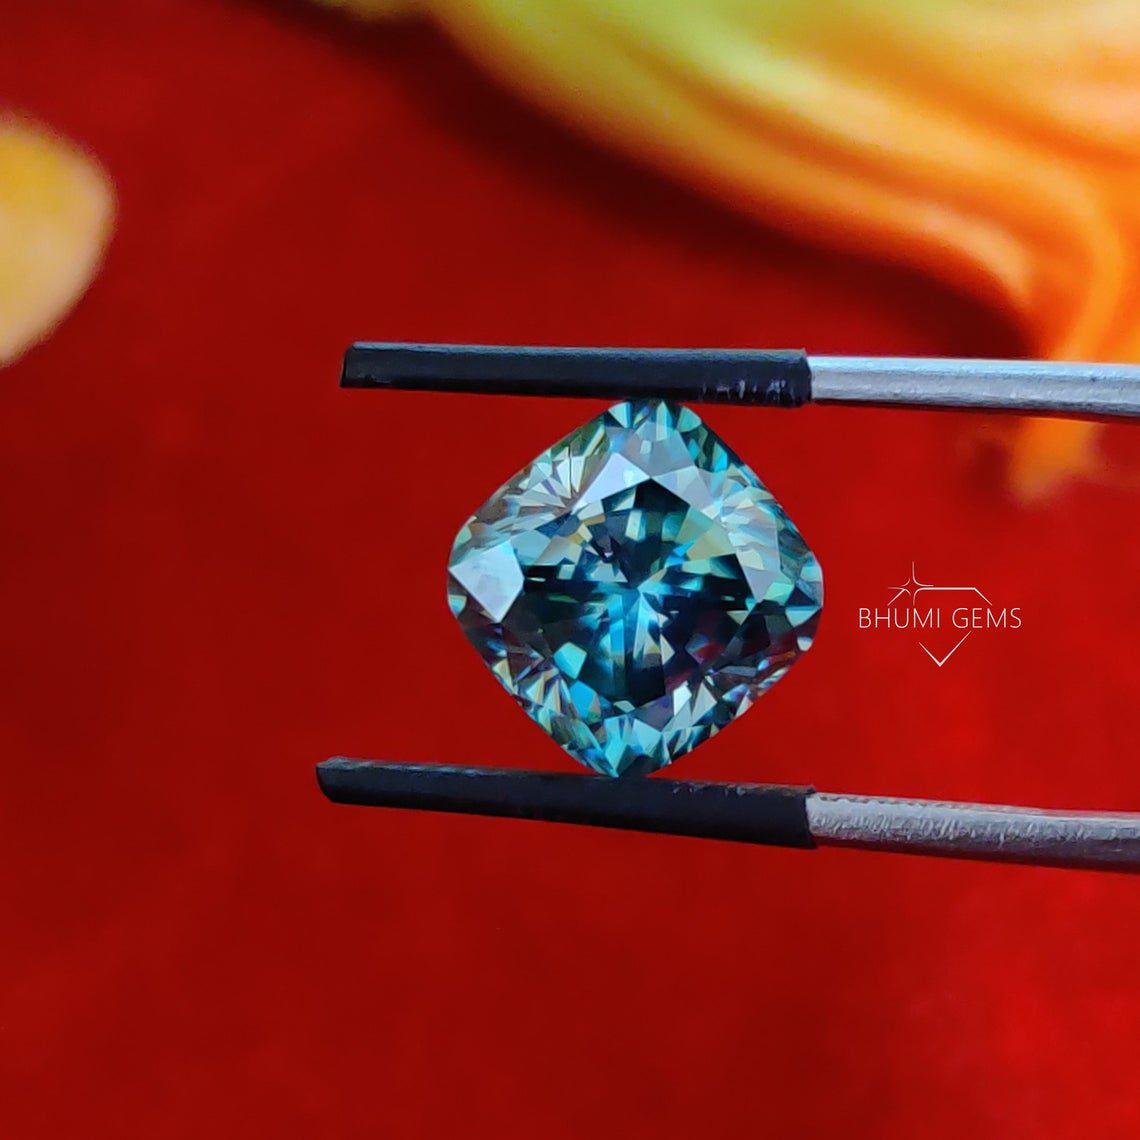 1CT-10CT Dark Blue Cushion Cut VVS1 Moissanite Loose Diamond | Loose Moissanite | Gemstone | For Jewelry Making Ring, Earring, Pendant